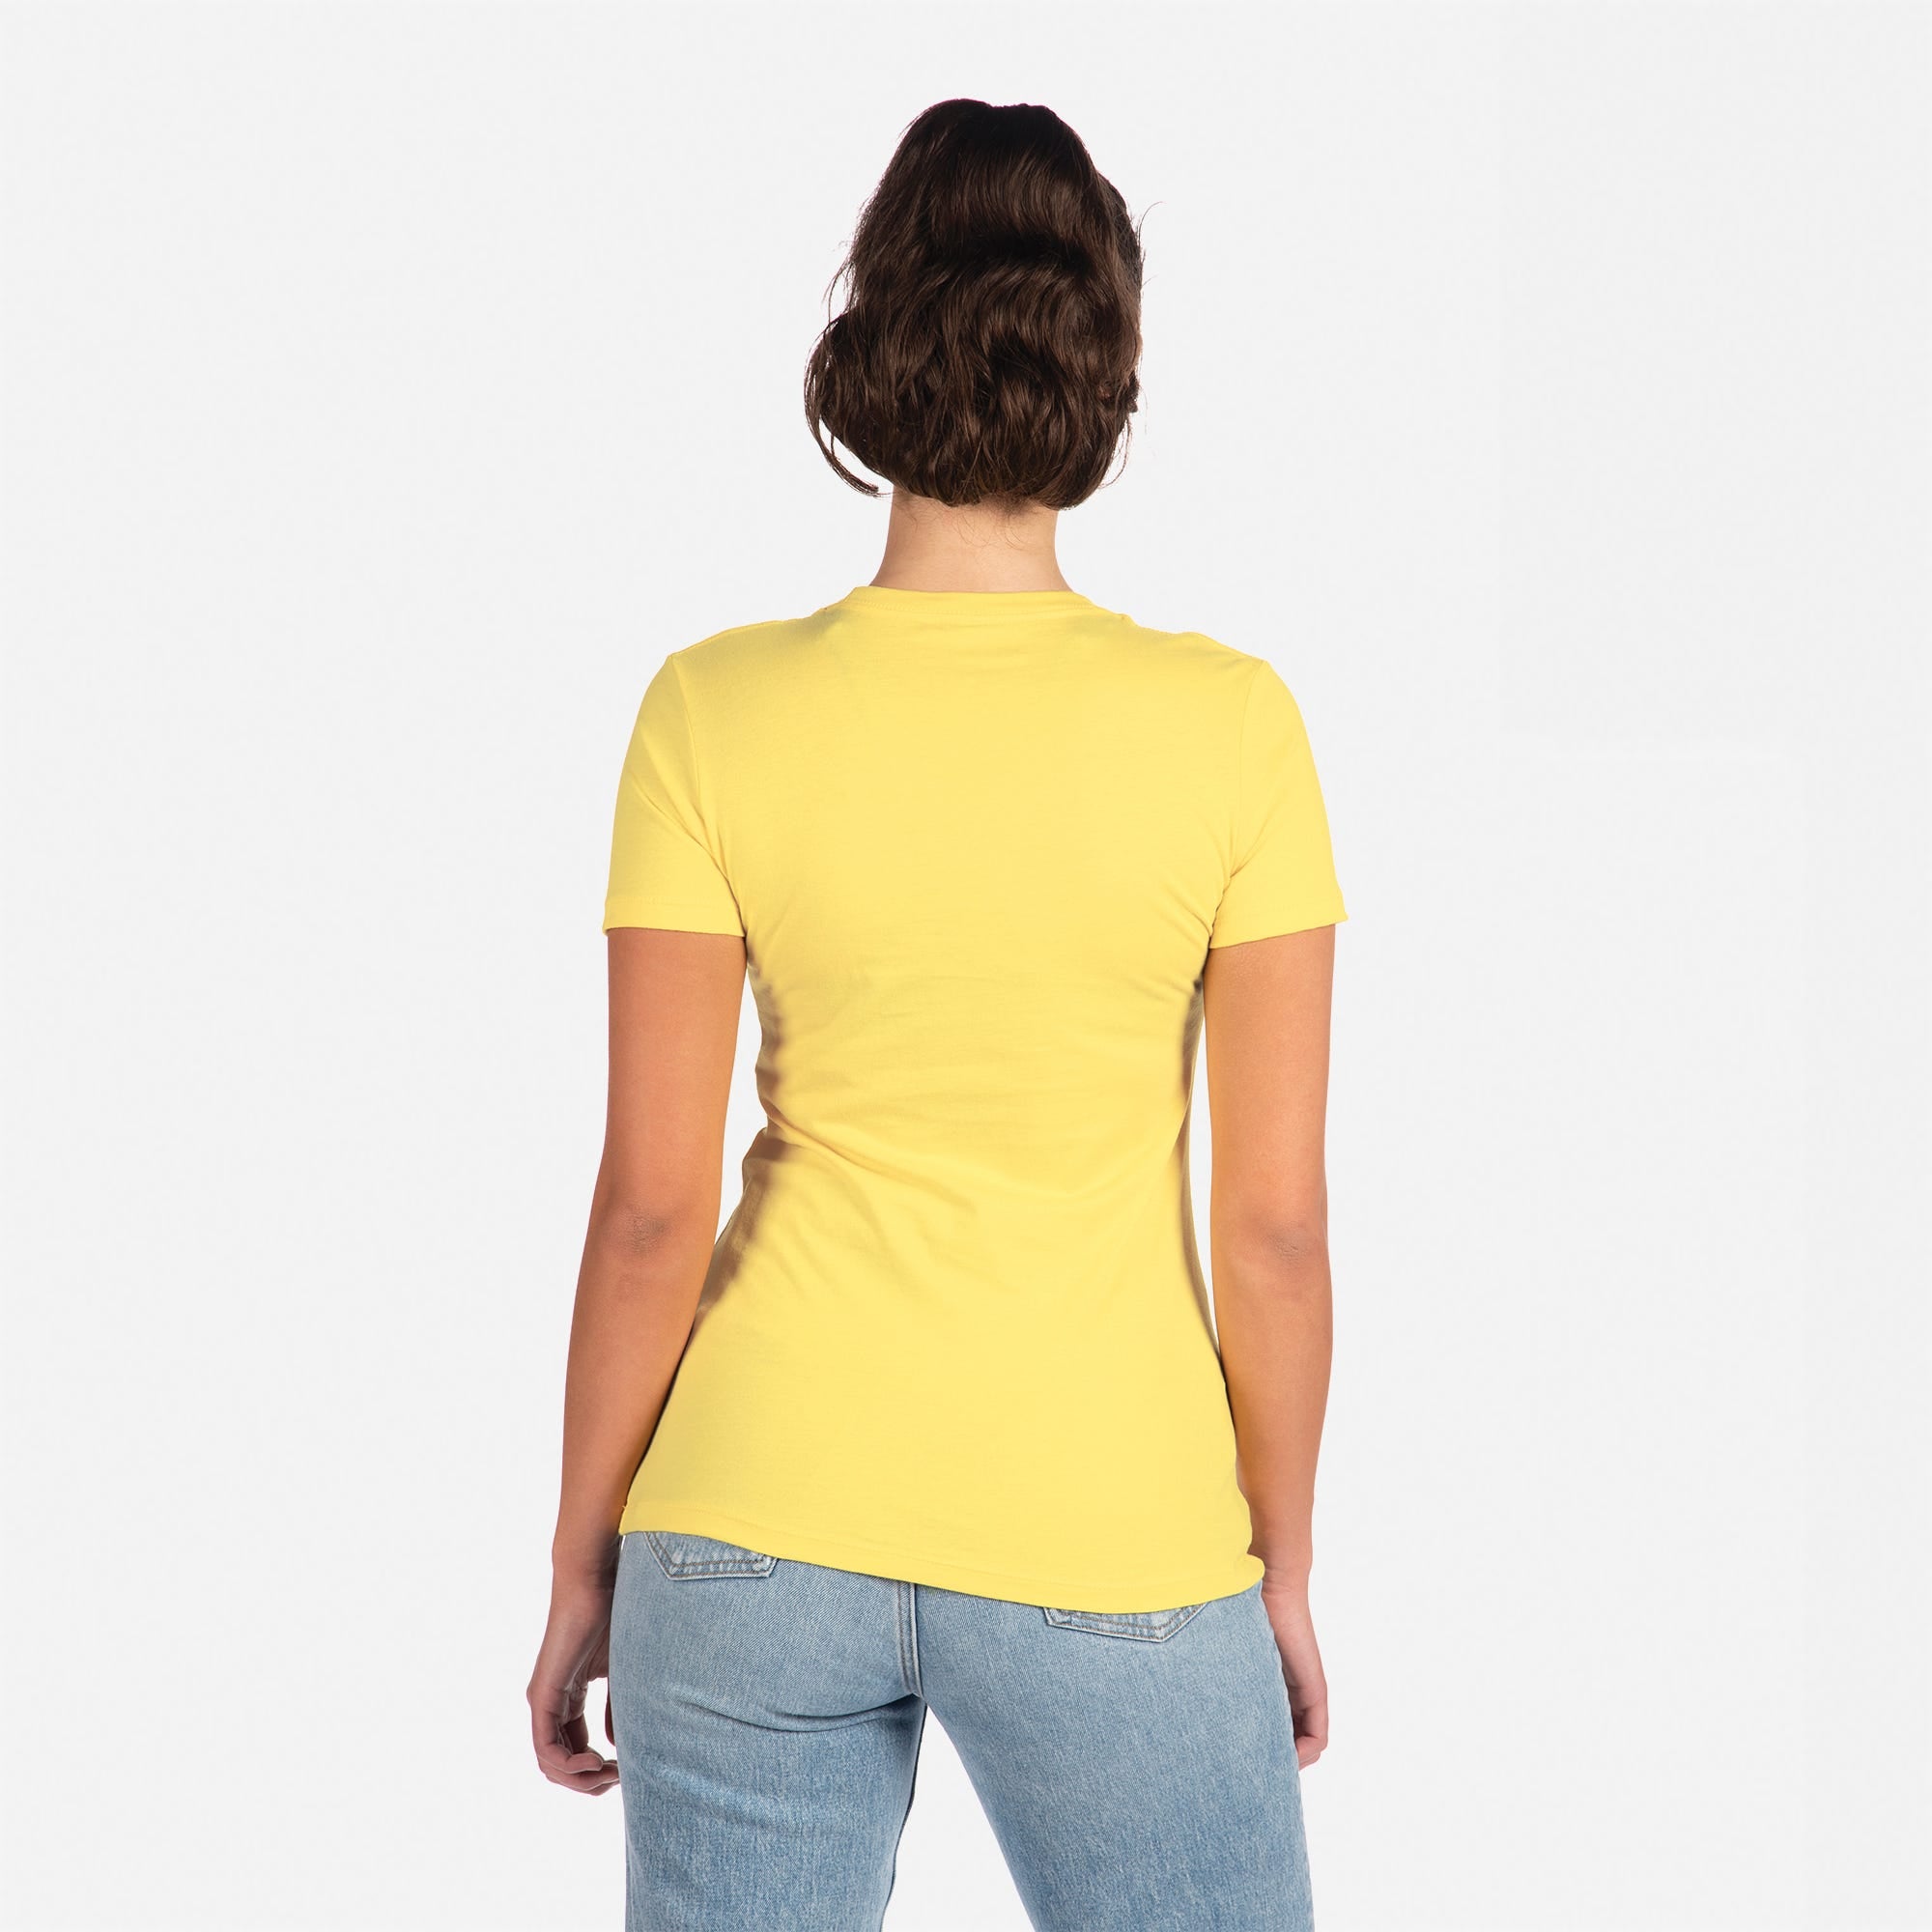 Cotton Boyfriend T-Shirt Vibrant Yellow 3900 Back View Next Level Apparel